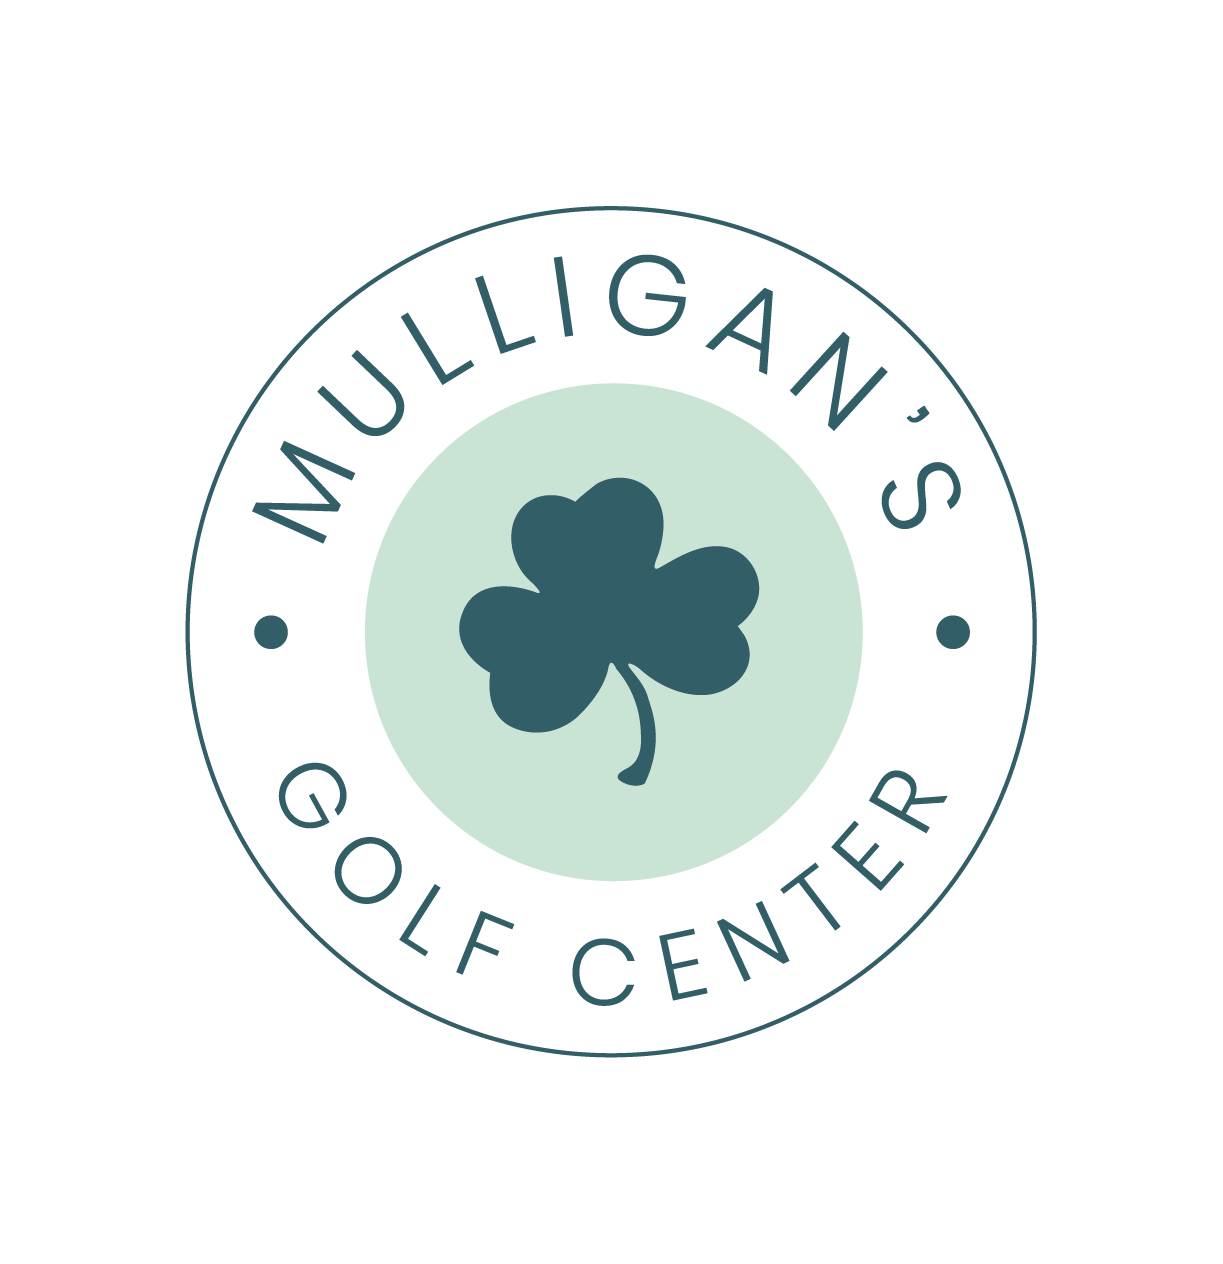 Mulligans Golf Center